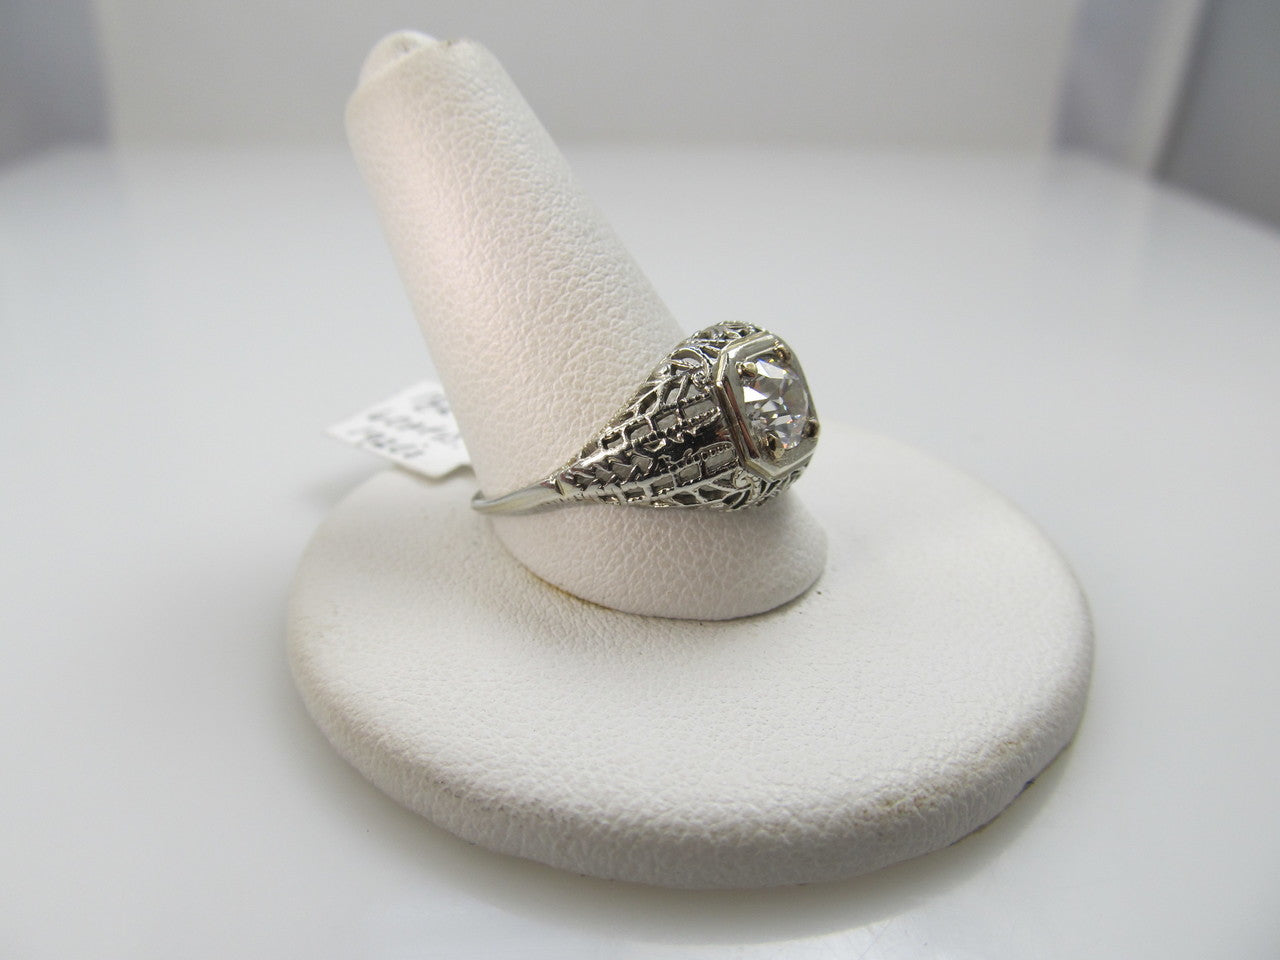 18k White Gold Filigree Ring With A .60ct Oec Diamond, Si1 F-g. Circa 1920.